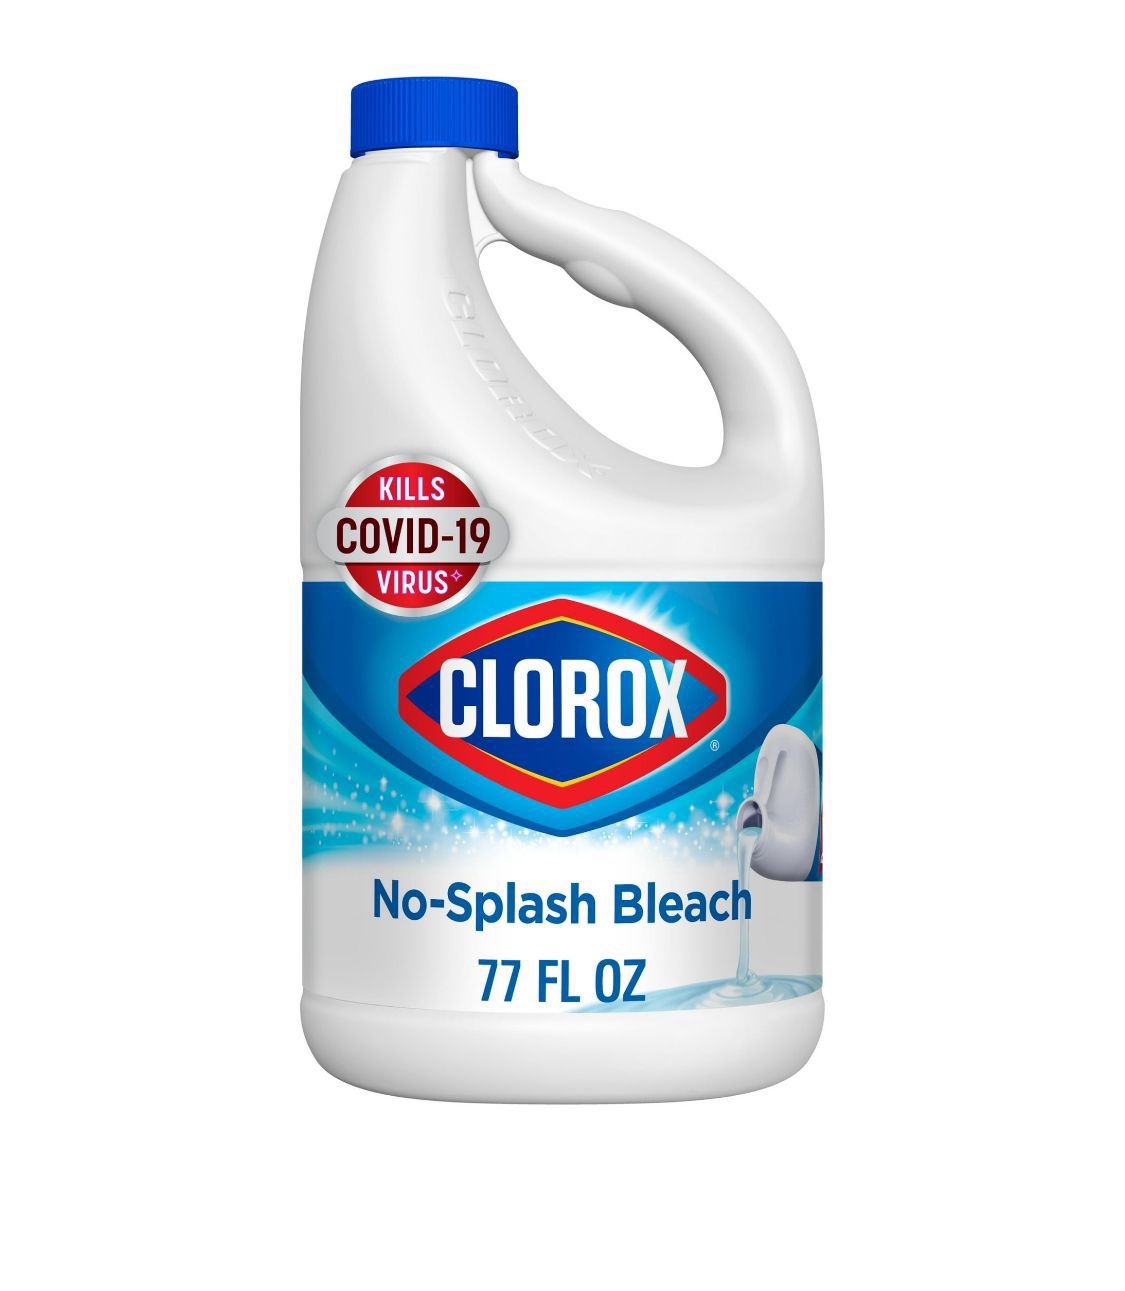 Clorox Splash-Less Liquid Bleach Cleaner, Regular Scent, 77 fl oz$3.99